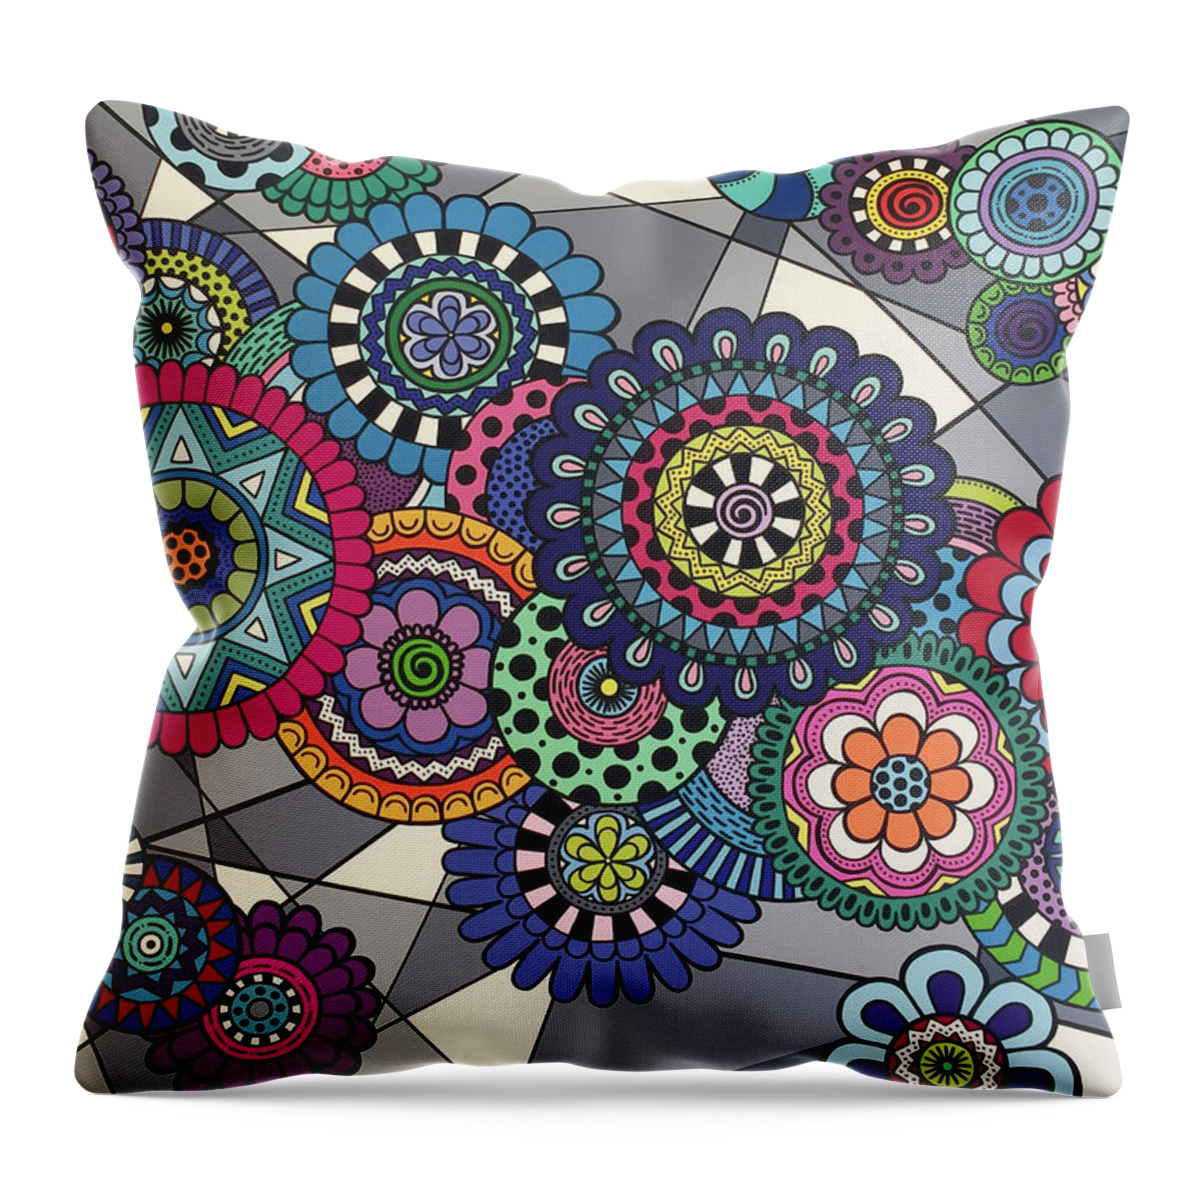 Mandala Throw Pillow featuring the painting Mandalas In Bloom by Beth Ann Scott